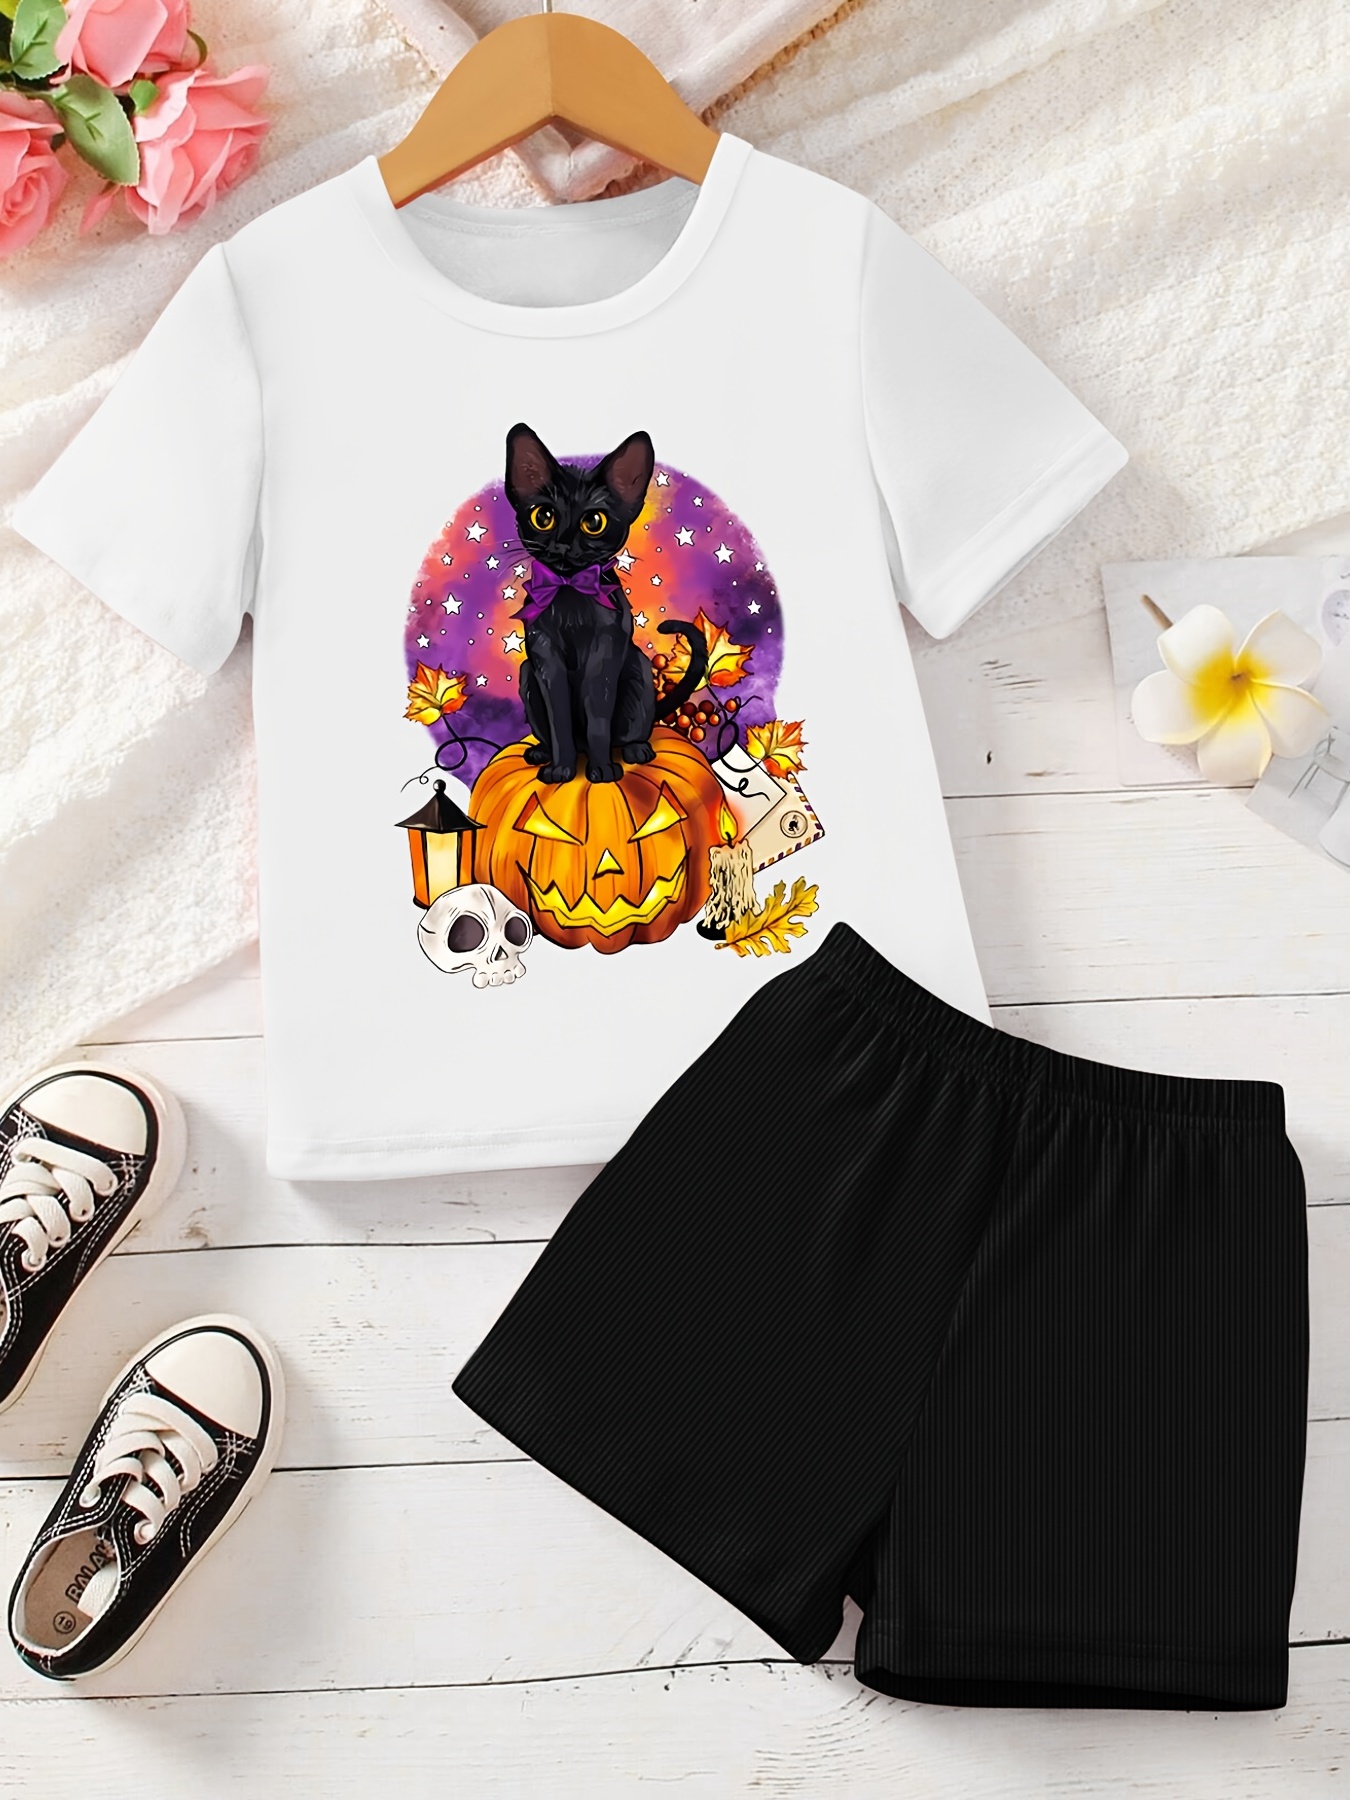 SHEIN Slayr 2pcs/set Sweatshirt And Pants With Kitten Printing Pattern